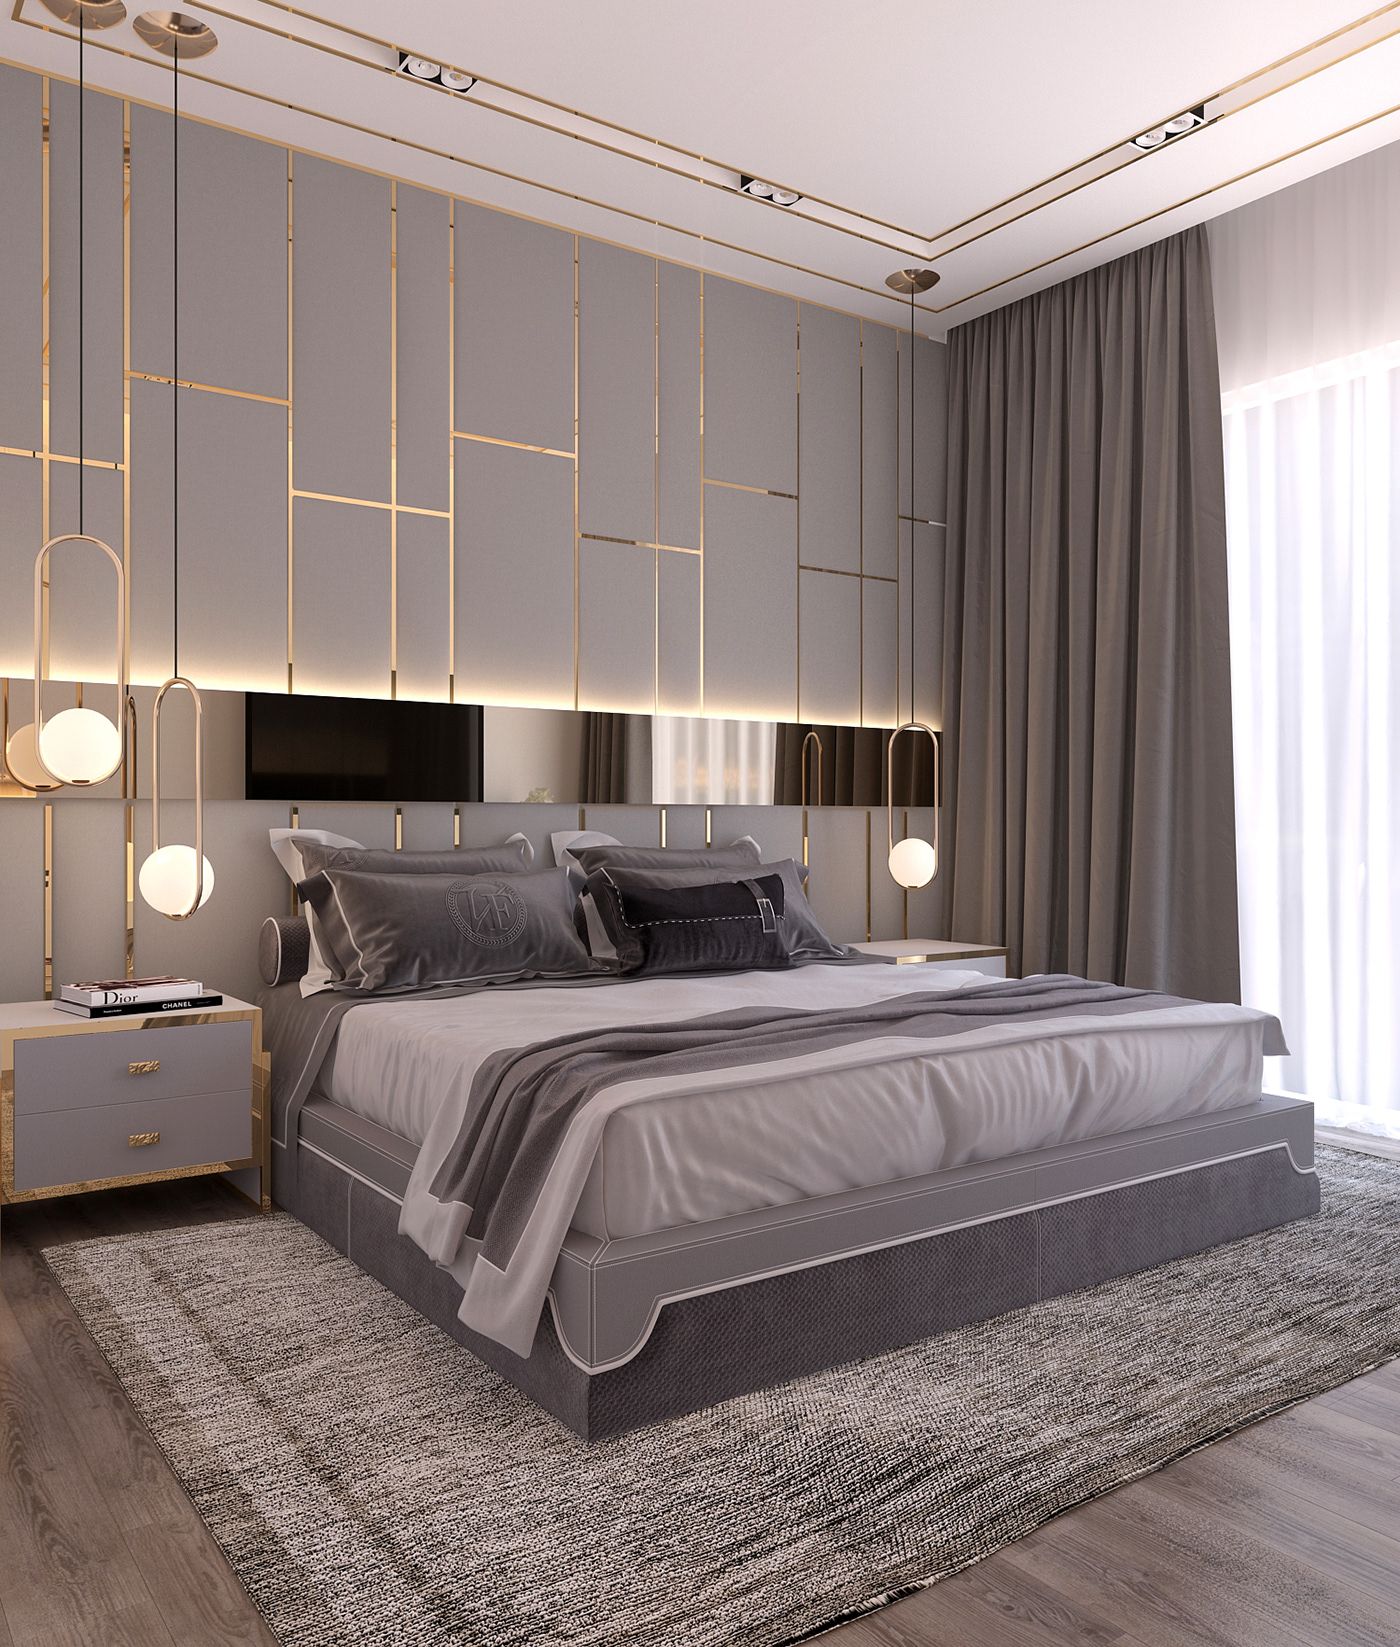 Modern Room Decor: A Fresh Breeze Of Style